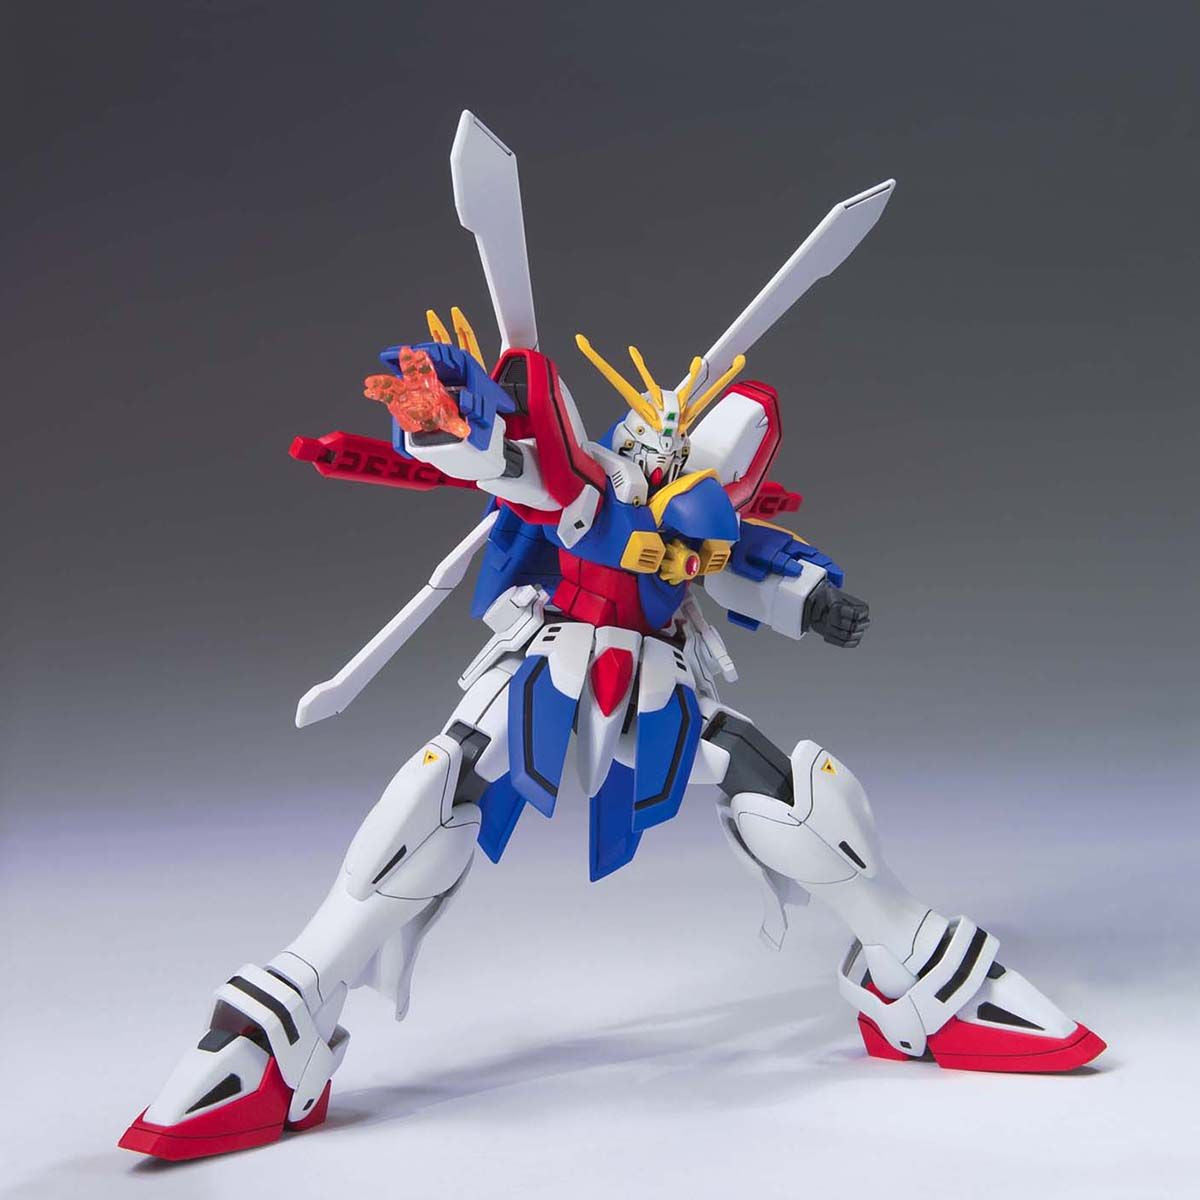 Bandai HGFC God Gundam Plastic Model Kit